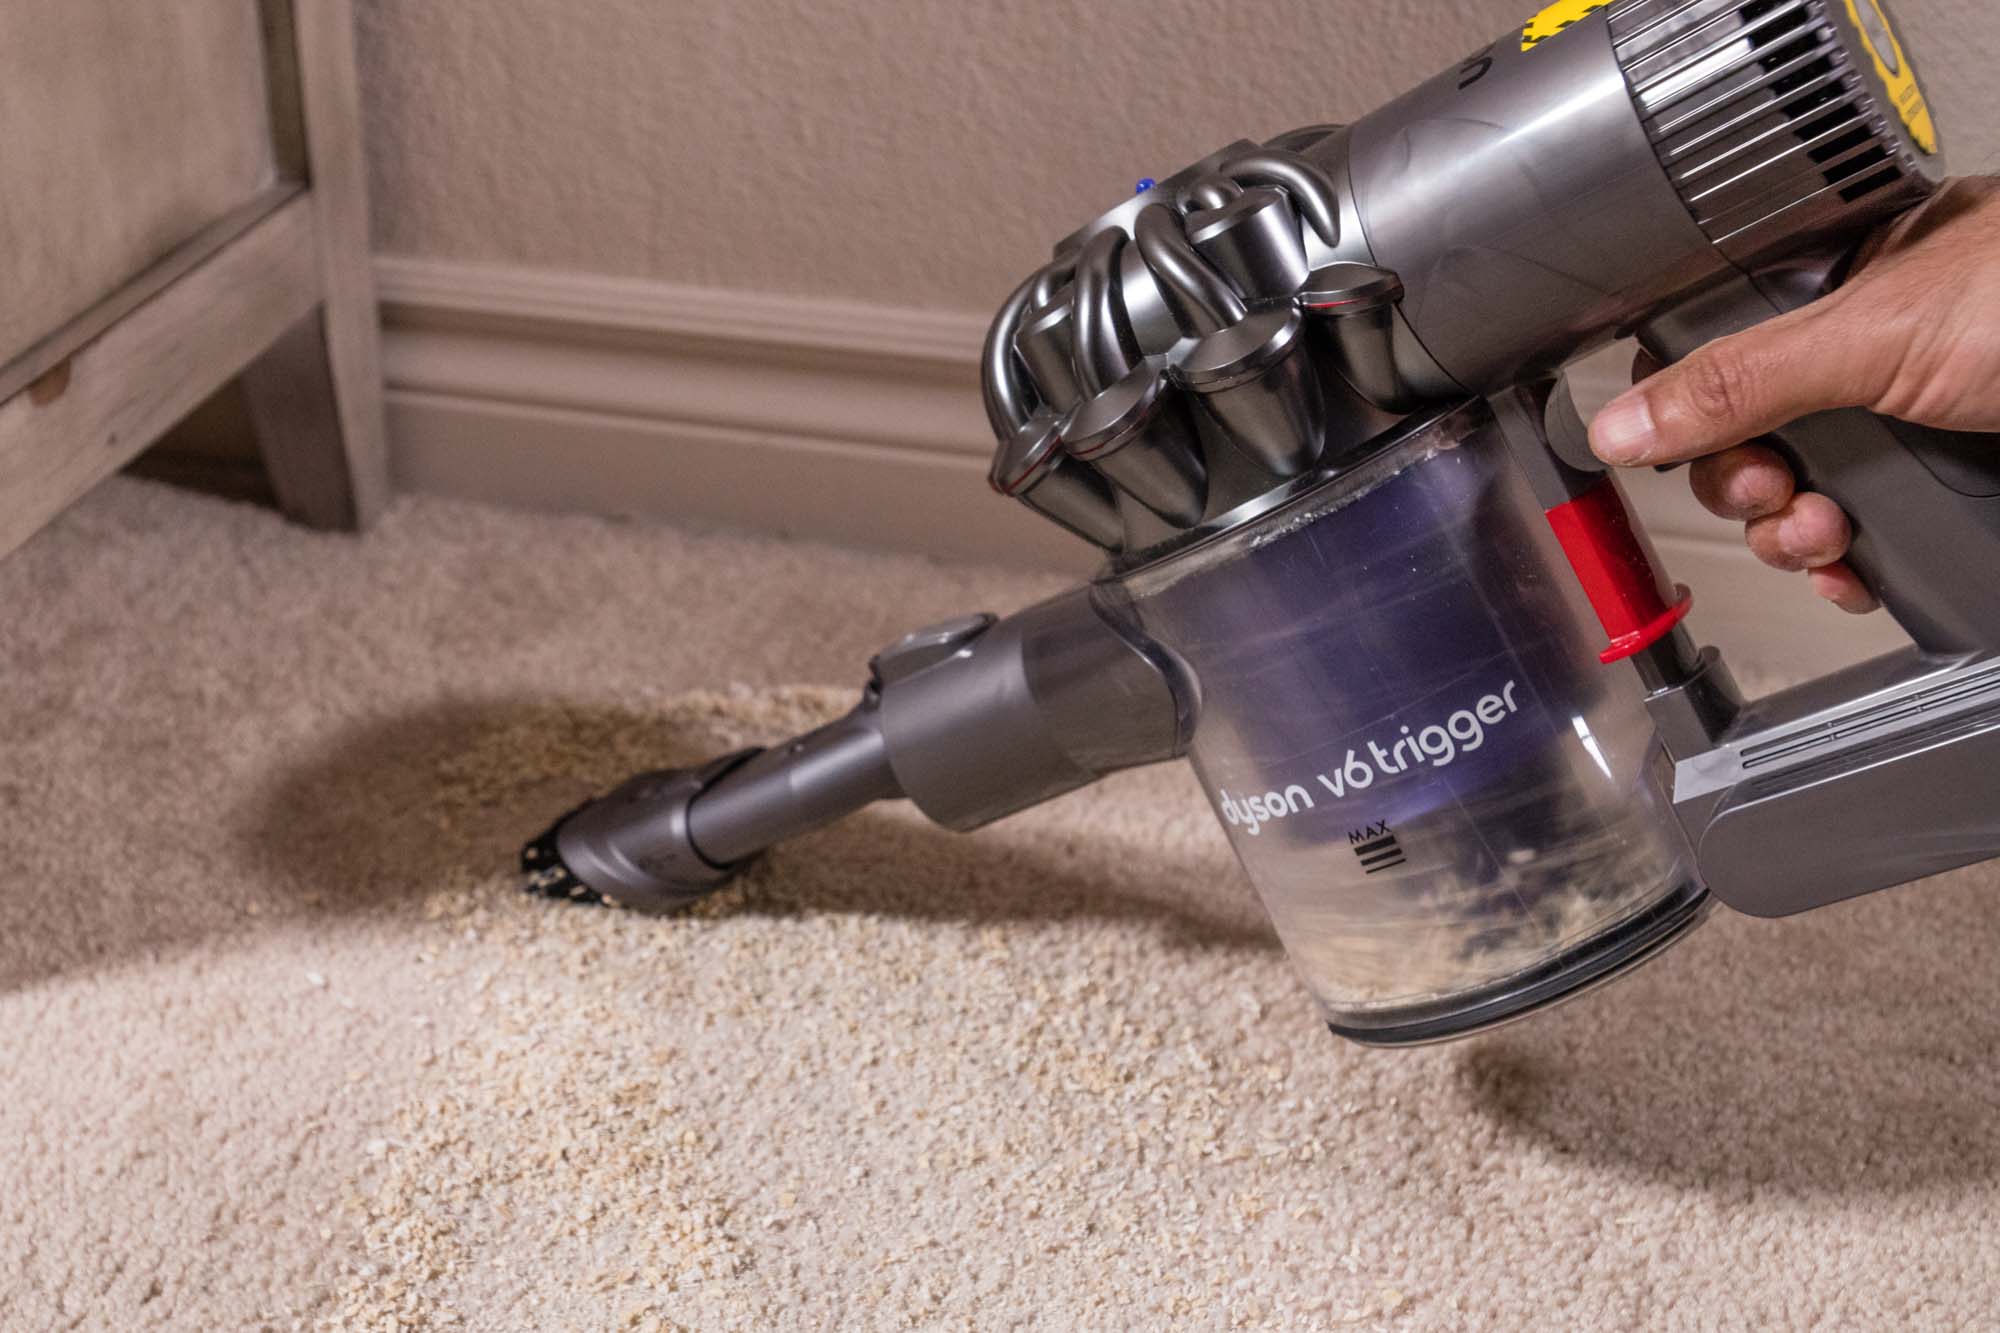 The Best Cordless Handheld Vacuums